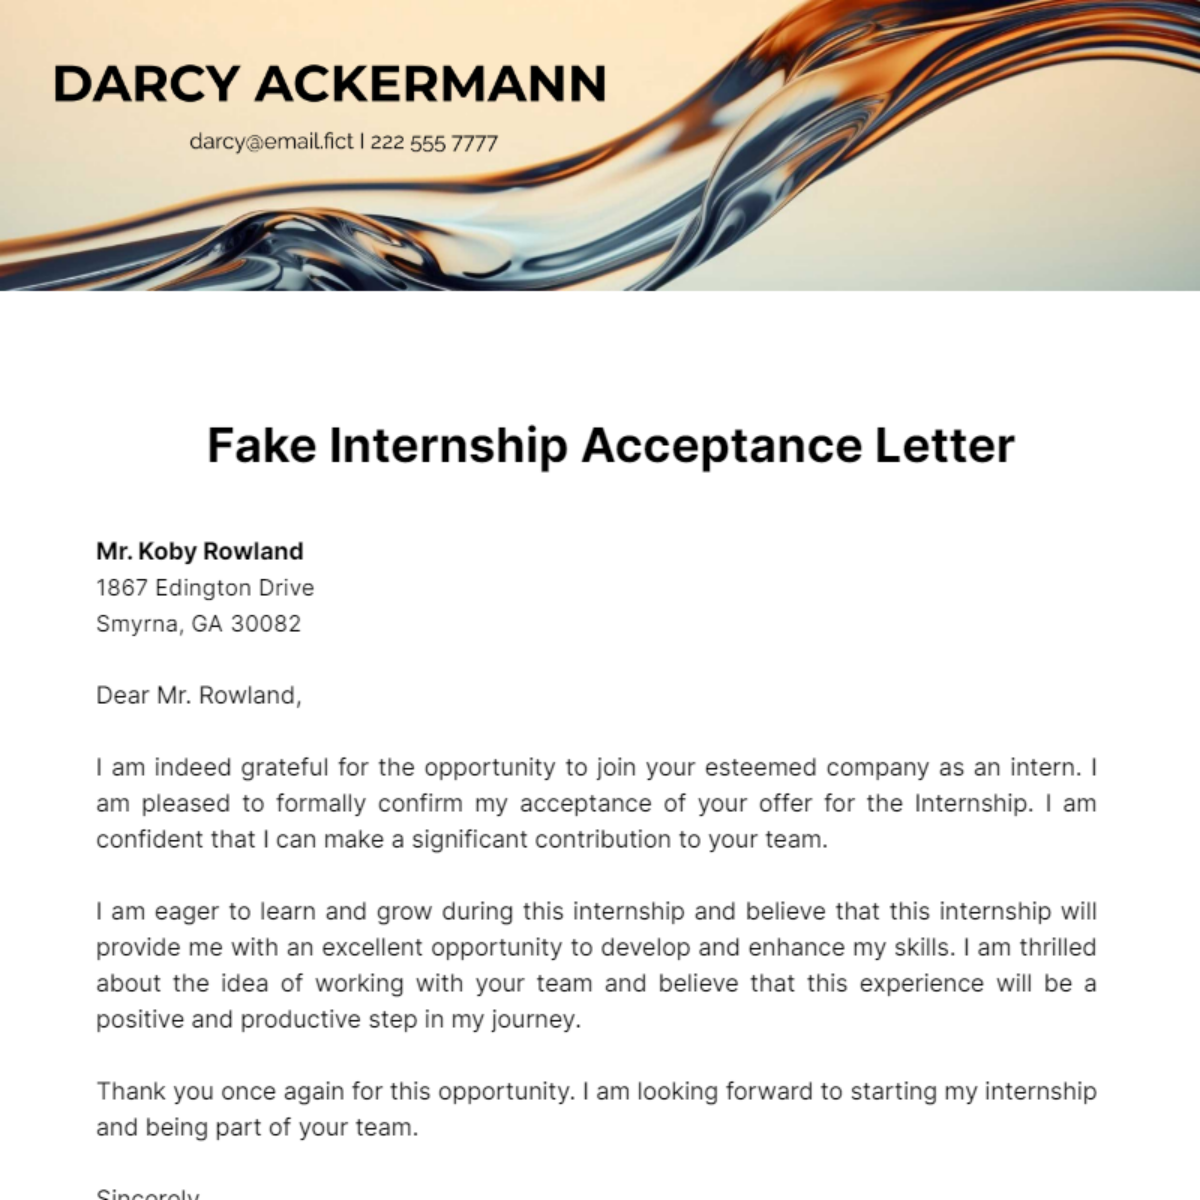 Fake Internship Acceptance Letter Template